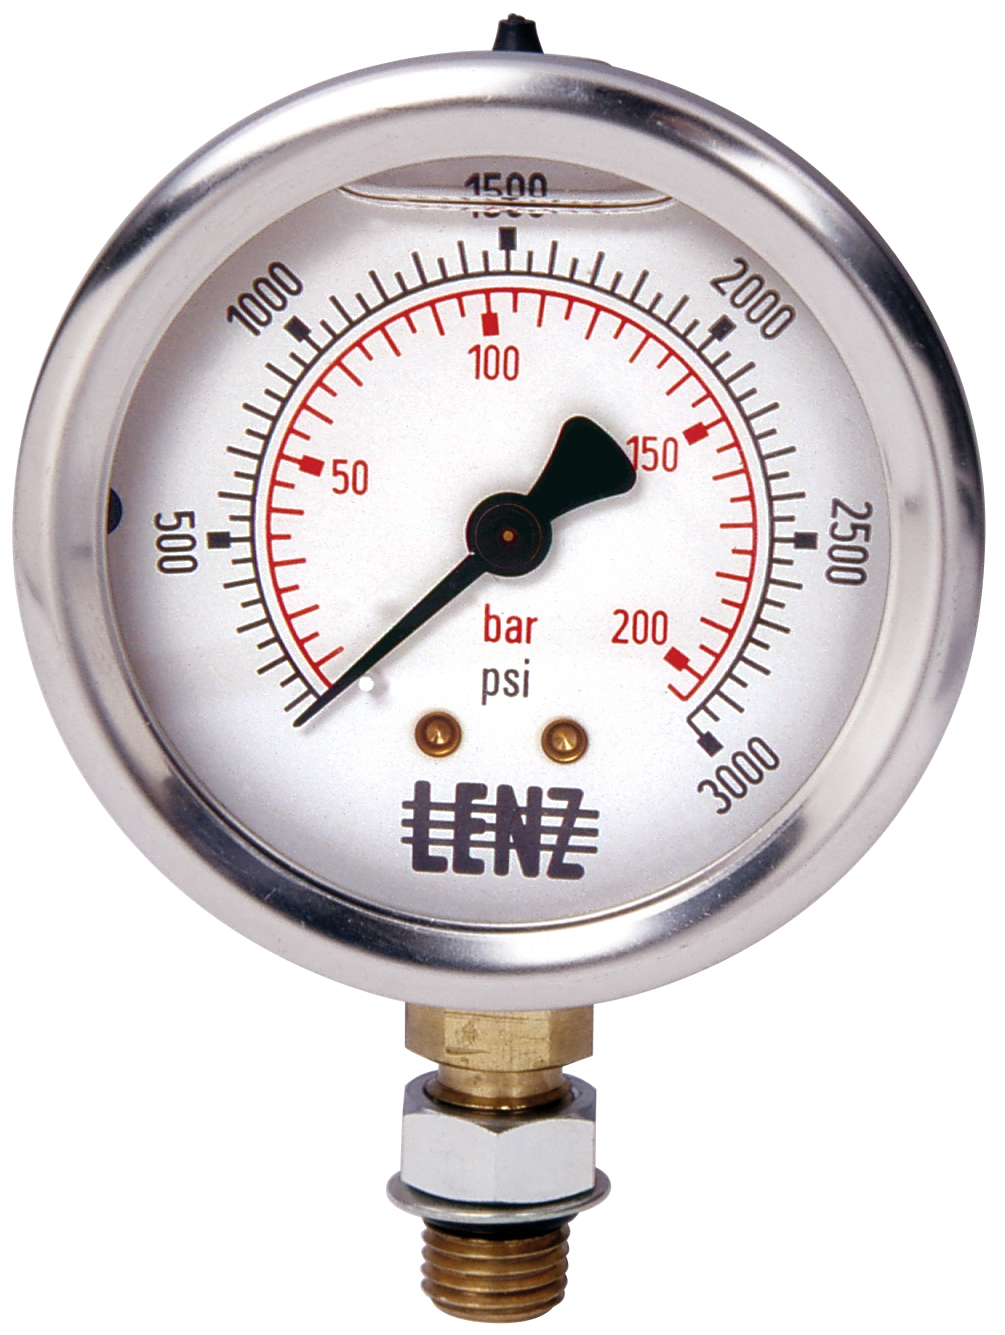 ; 0 to 200 psi AO-68000-11 F Cole-Parmer PVDF Pressure Gauge ; 0 to 200 psi 1/4 NPT PTFE Diaphragm Seal F 1/4 NPT 